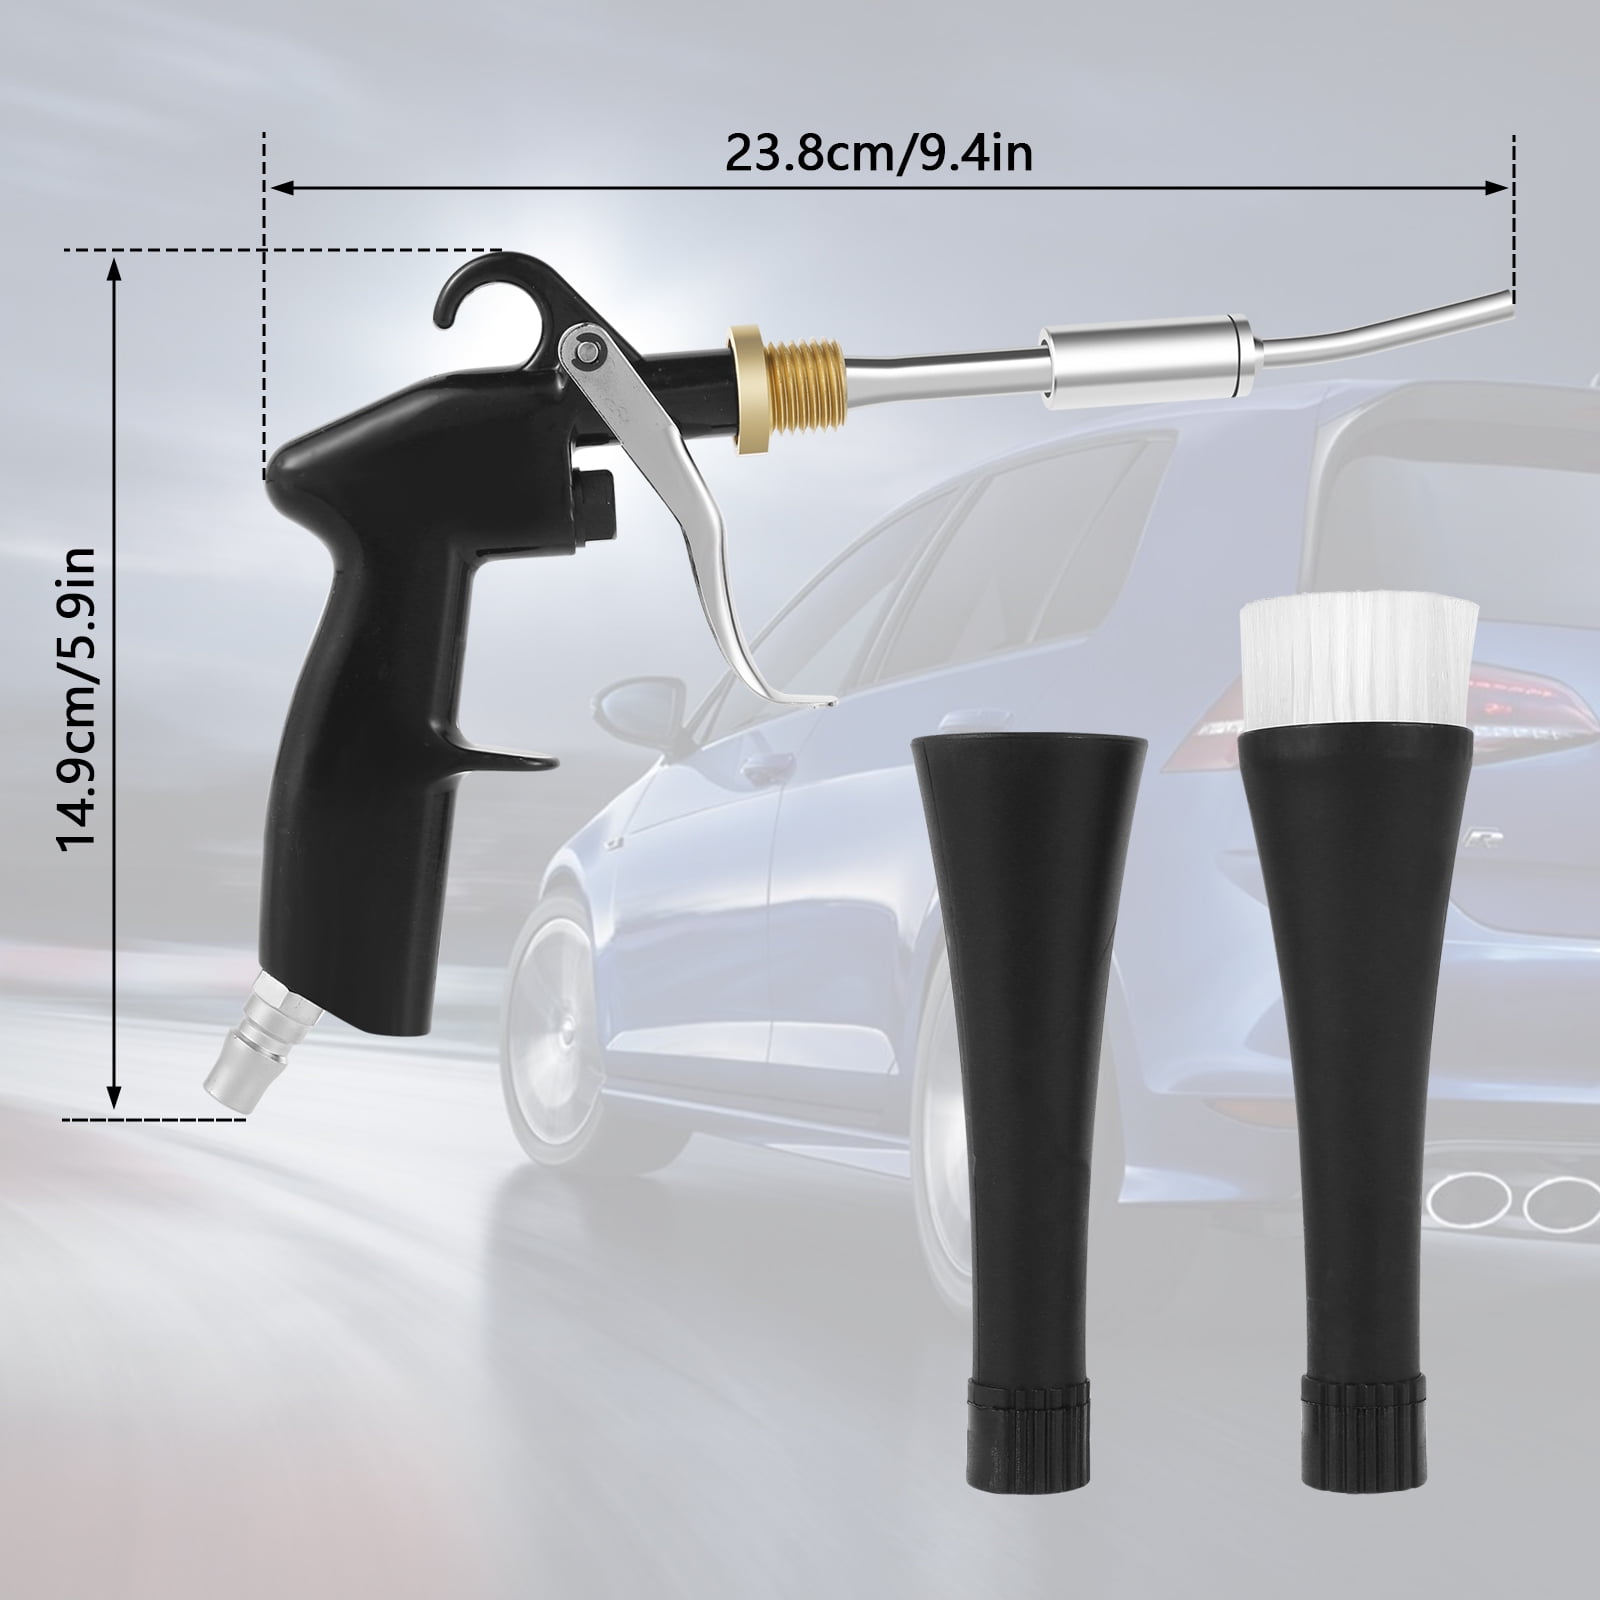 Vehicle Cleaning / Detailing Spray Bottle Label Set – PrintPeel&Stick